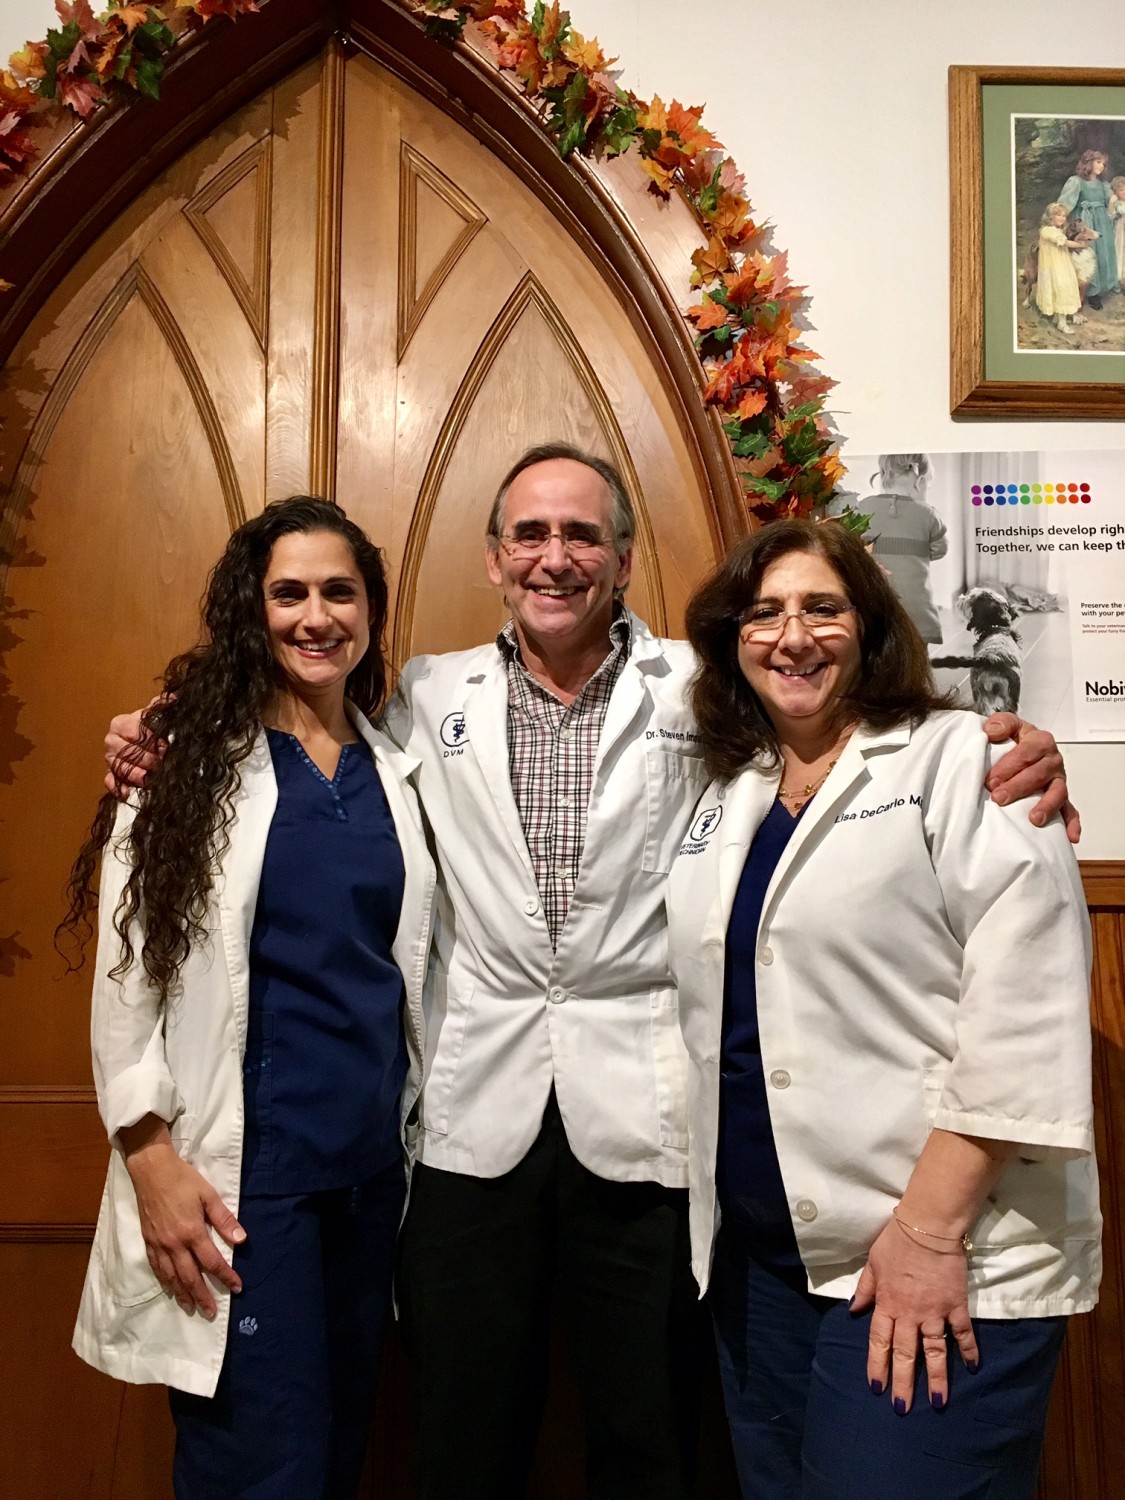 Dr. Betty Nussbaum, Dr. Steve Immerblum, and Lisa DeCarlo MS, LVT